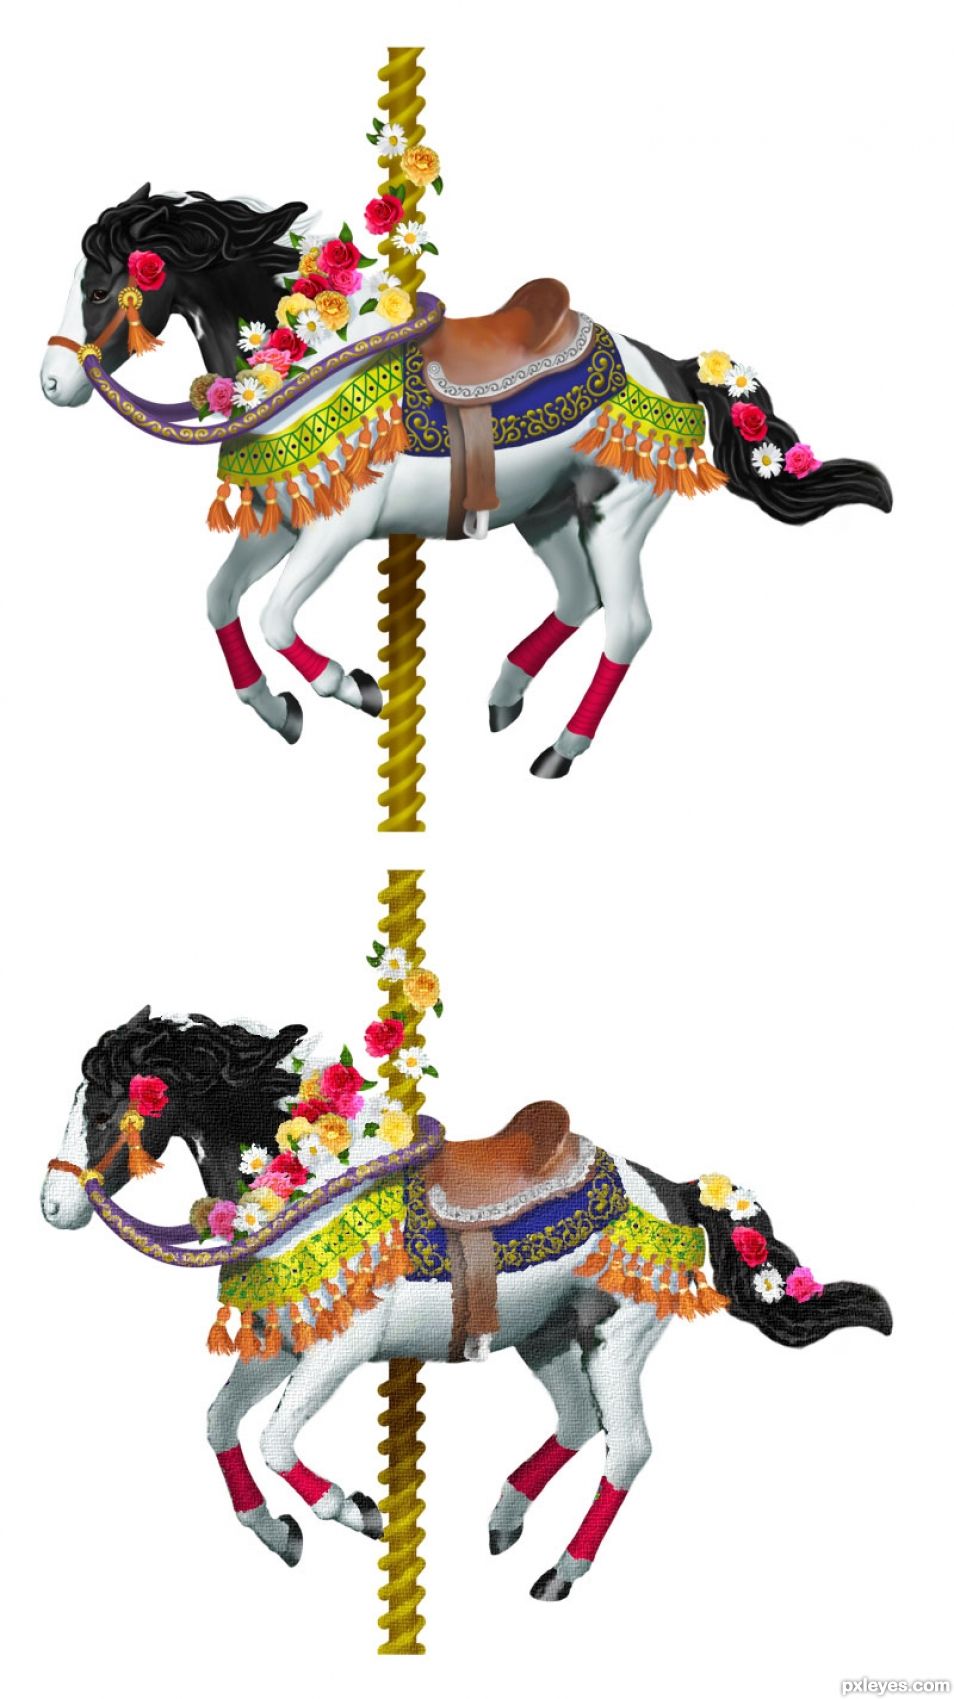 Creation of Carousel Pony: Step 4